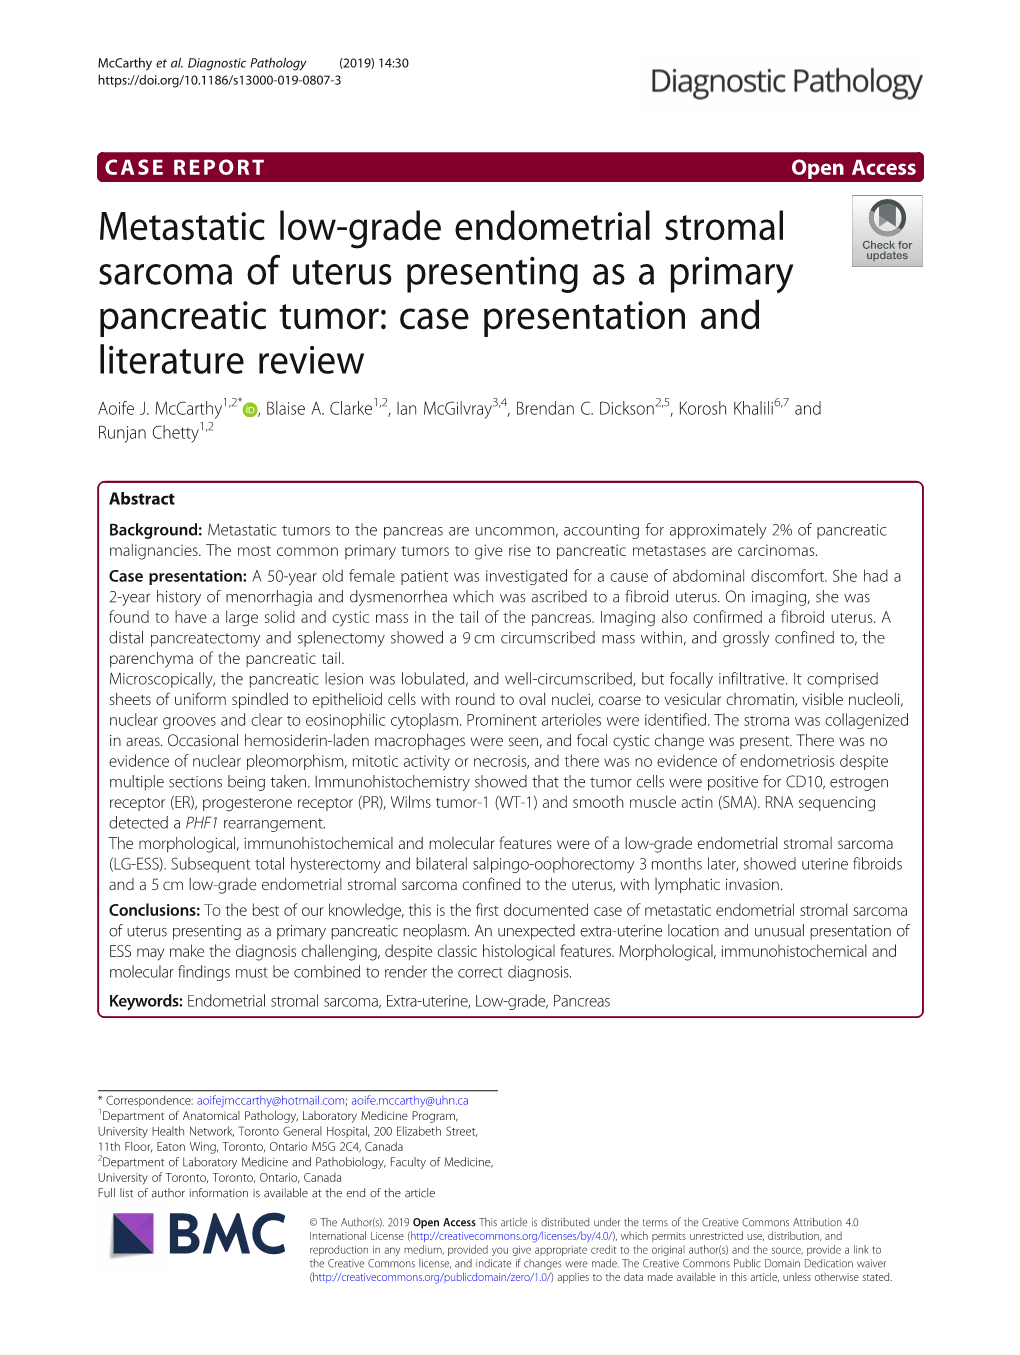 Metastatic Low-Grade Endometrial Stromal Sarcoma of Uterus Presenting As a Primary Pancreatic Tumor: Case Presentation and Literature Review Aoife J